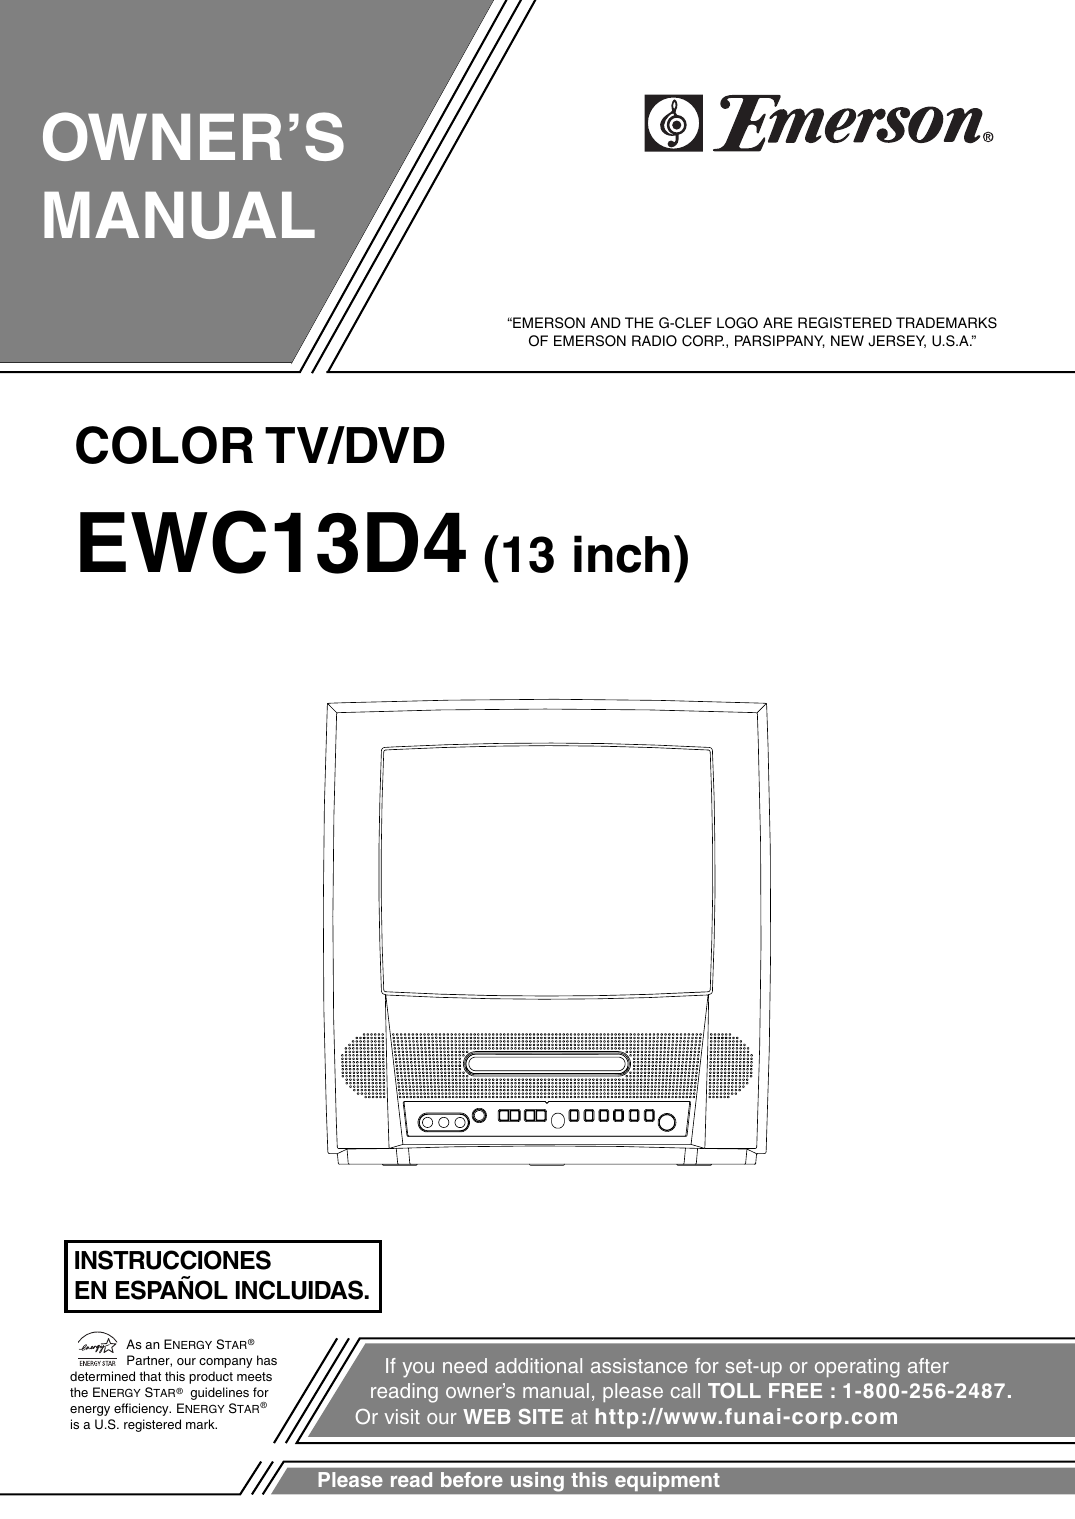 Emerson Tv Model Ld195emx Manual